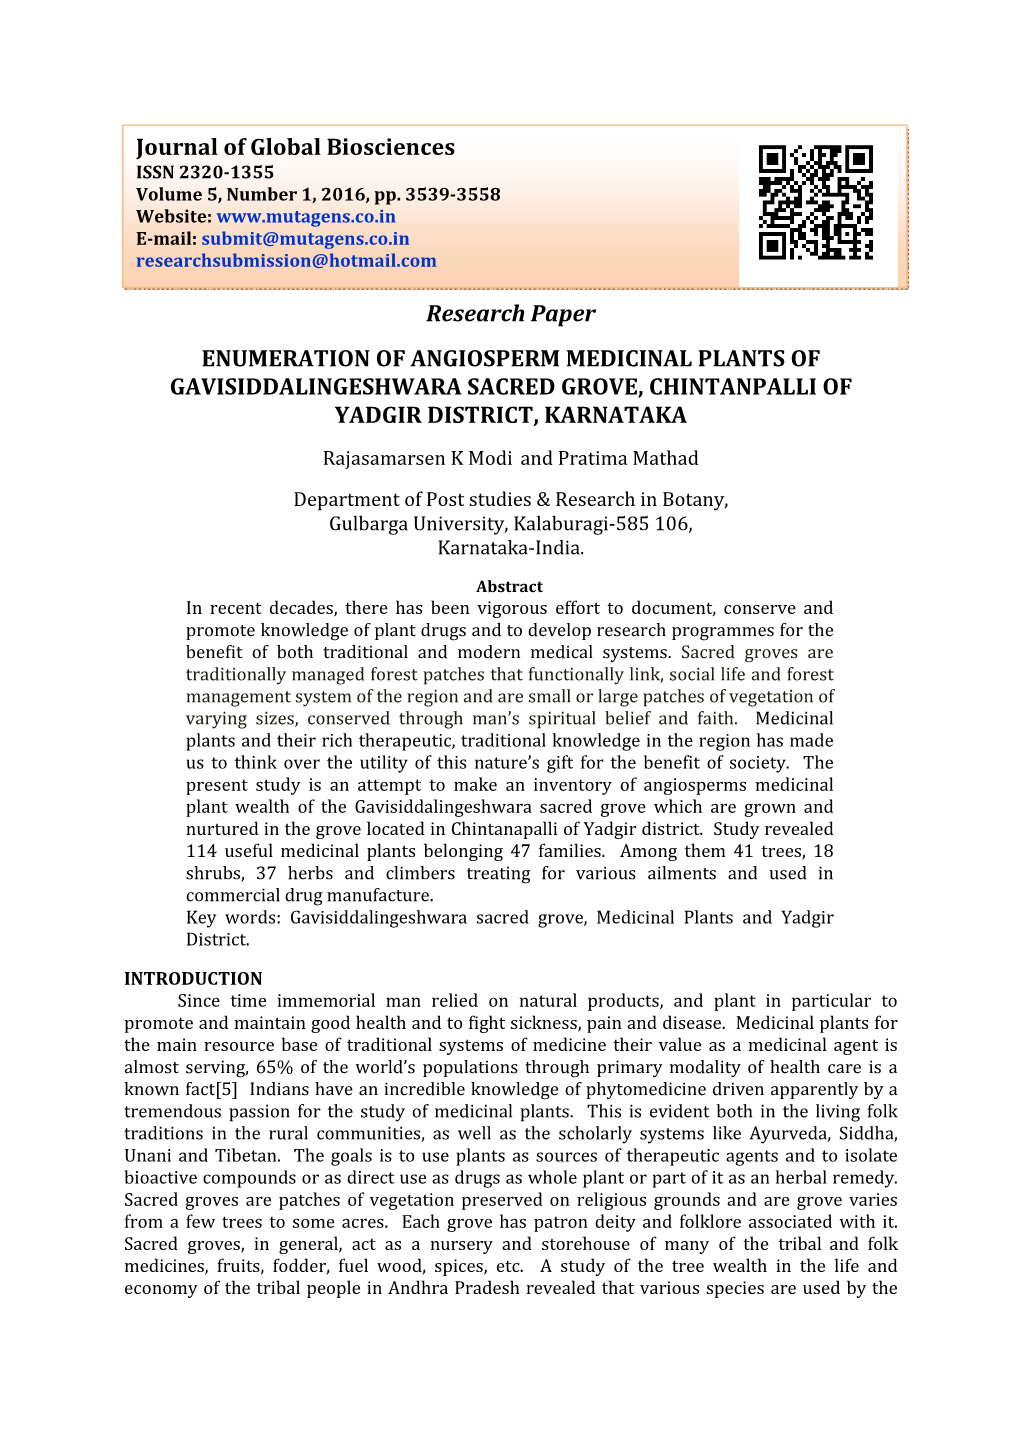 Research Paper ENUMERATION of ANGIOSPERM MEDICINAL PLANTS of GAVISIDDALINGESHWARA SACRED GROVE, CHINTANPALLI of YADGIR DISTRICT, KARNATAKA